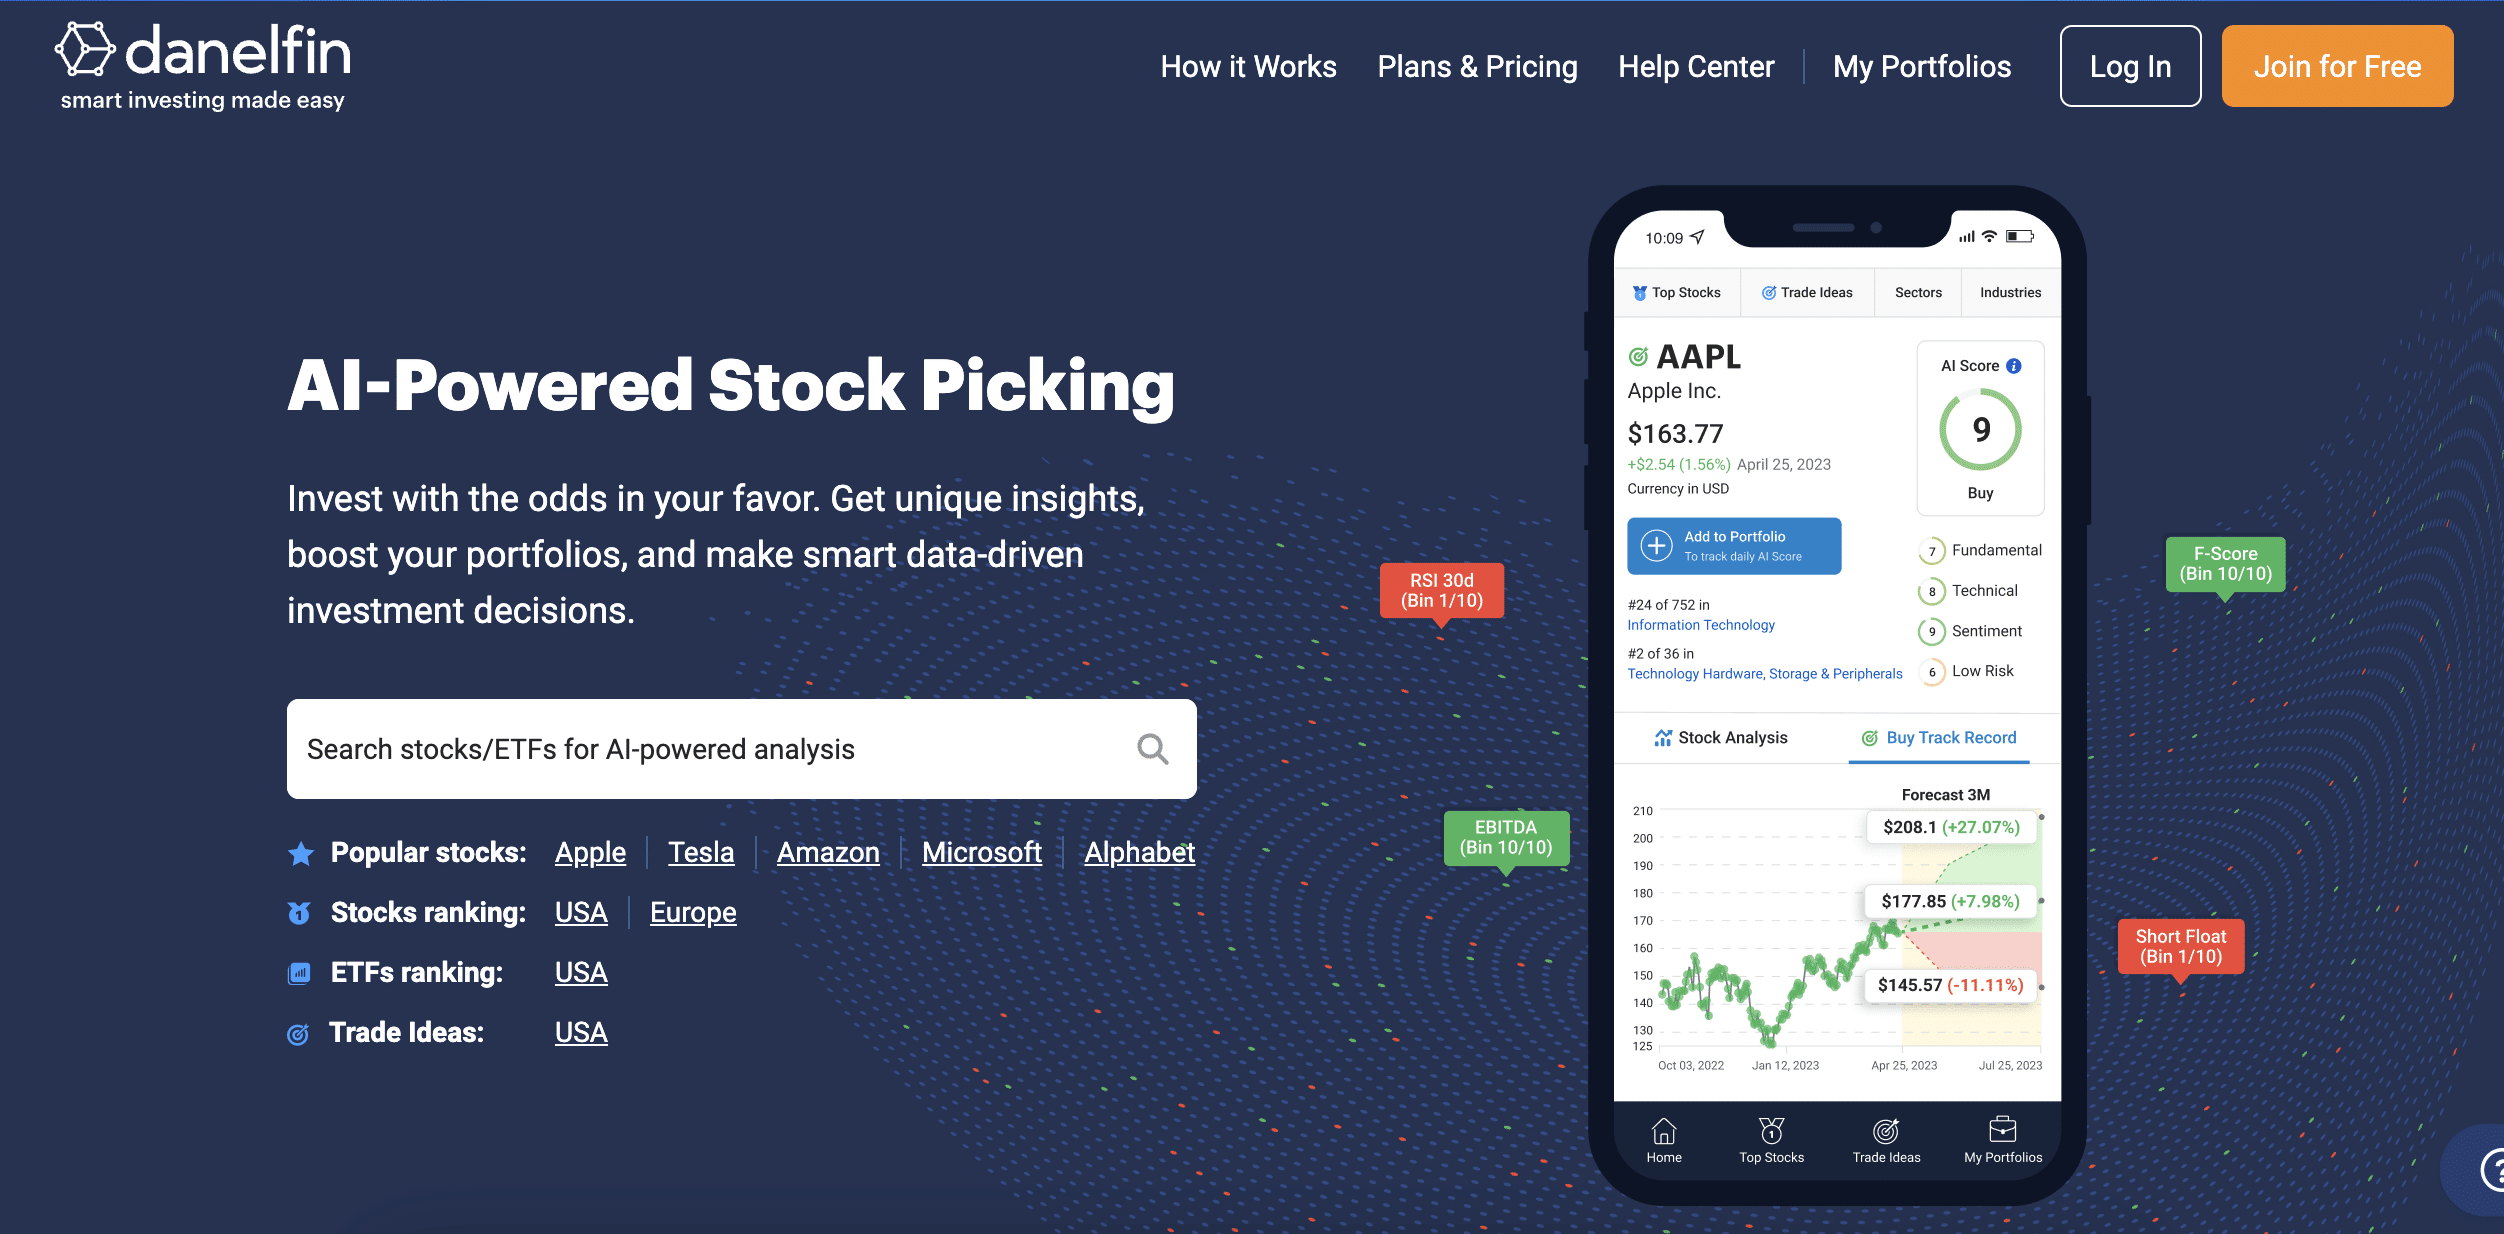 Danelfin AI stock prediction scores